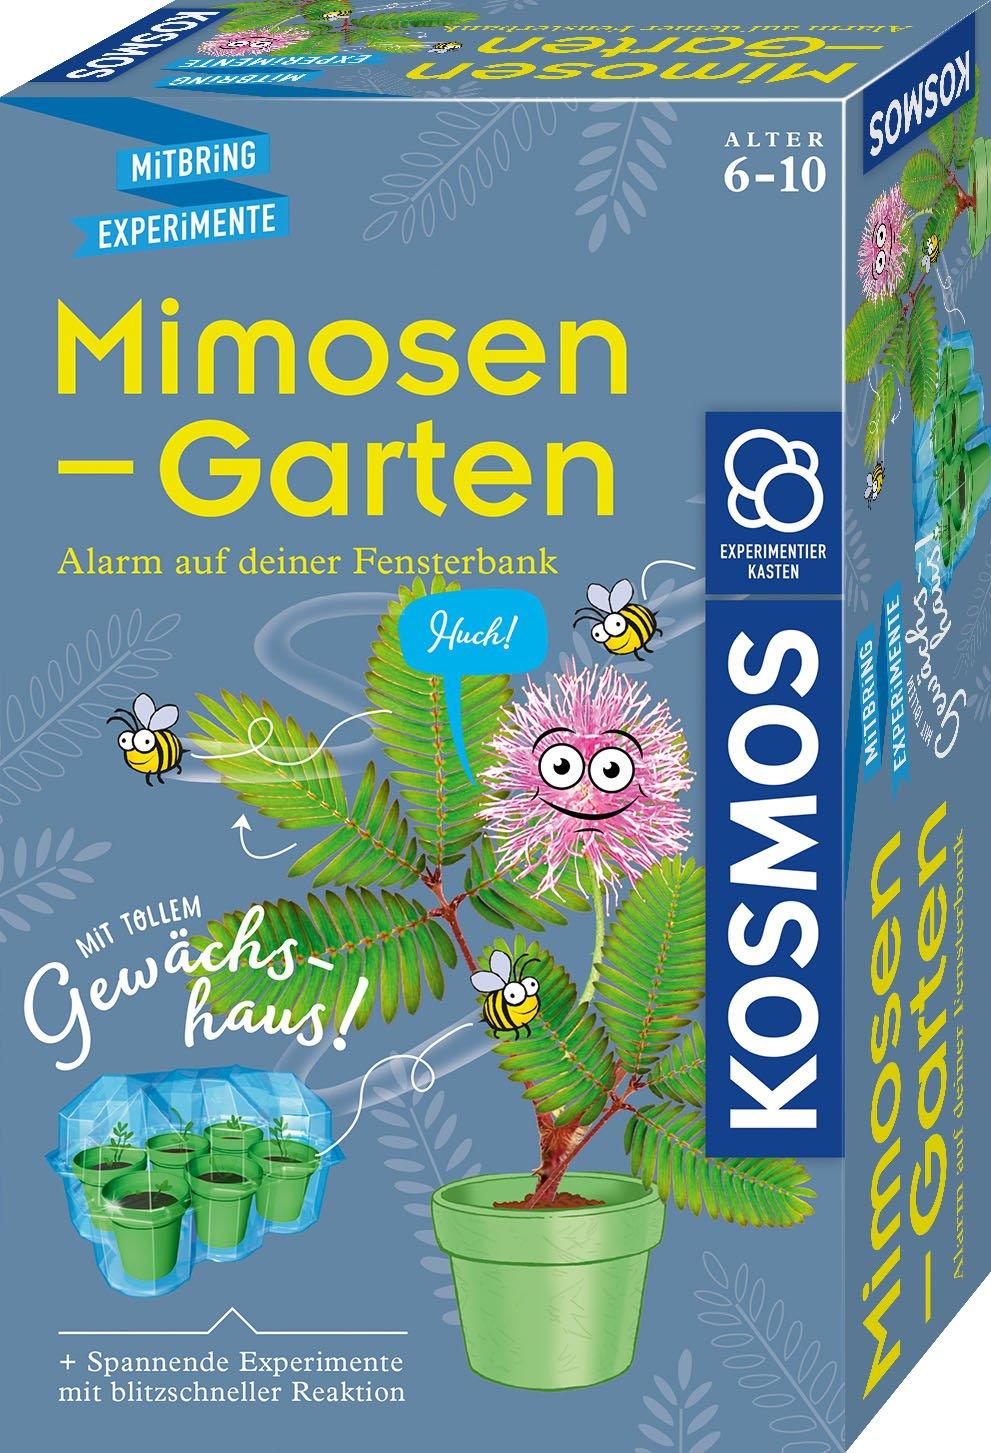 Mitbring-Experimente - Mimosengarten